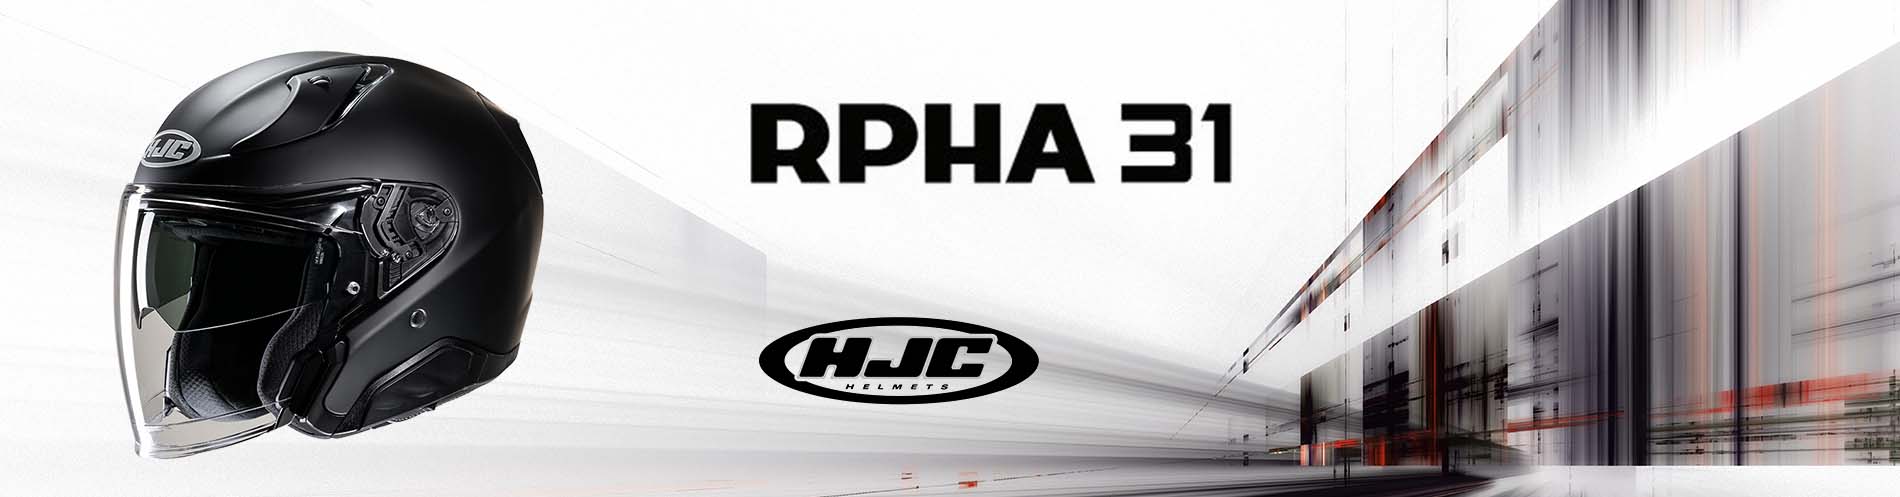 HJC RPHA 31